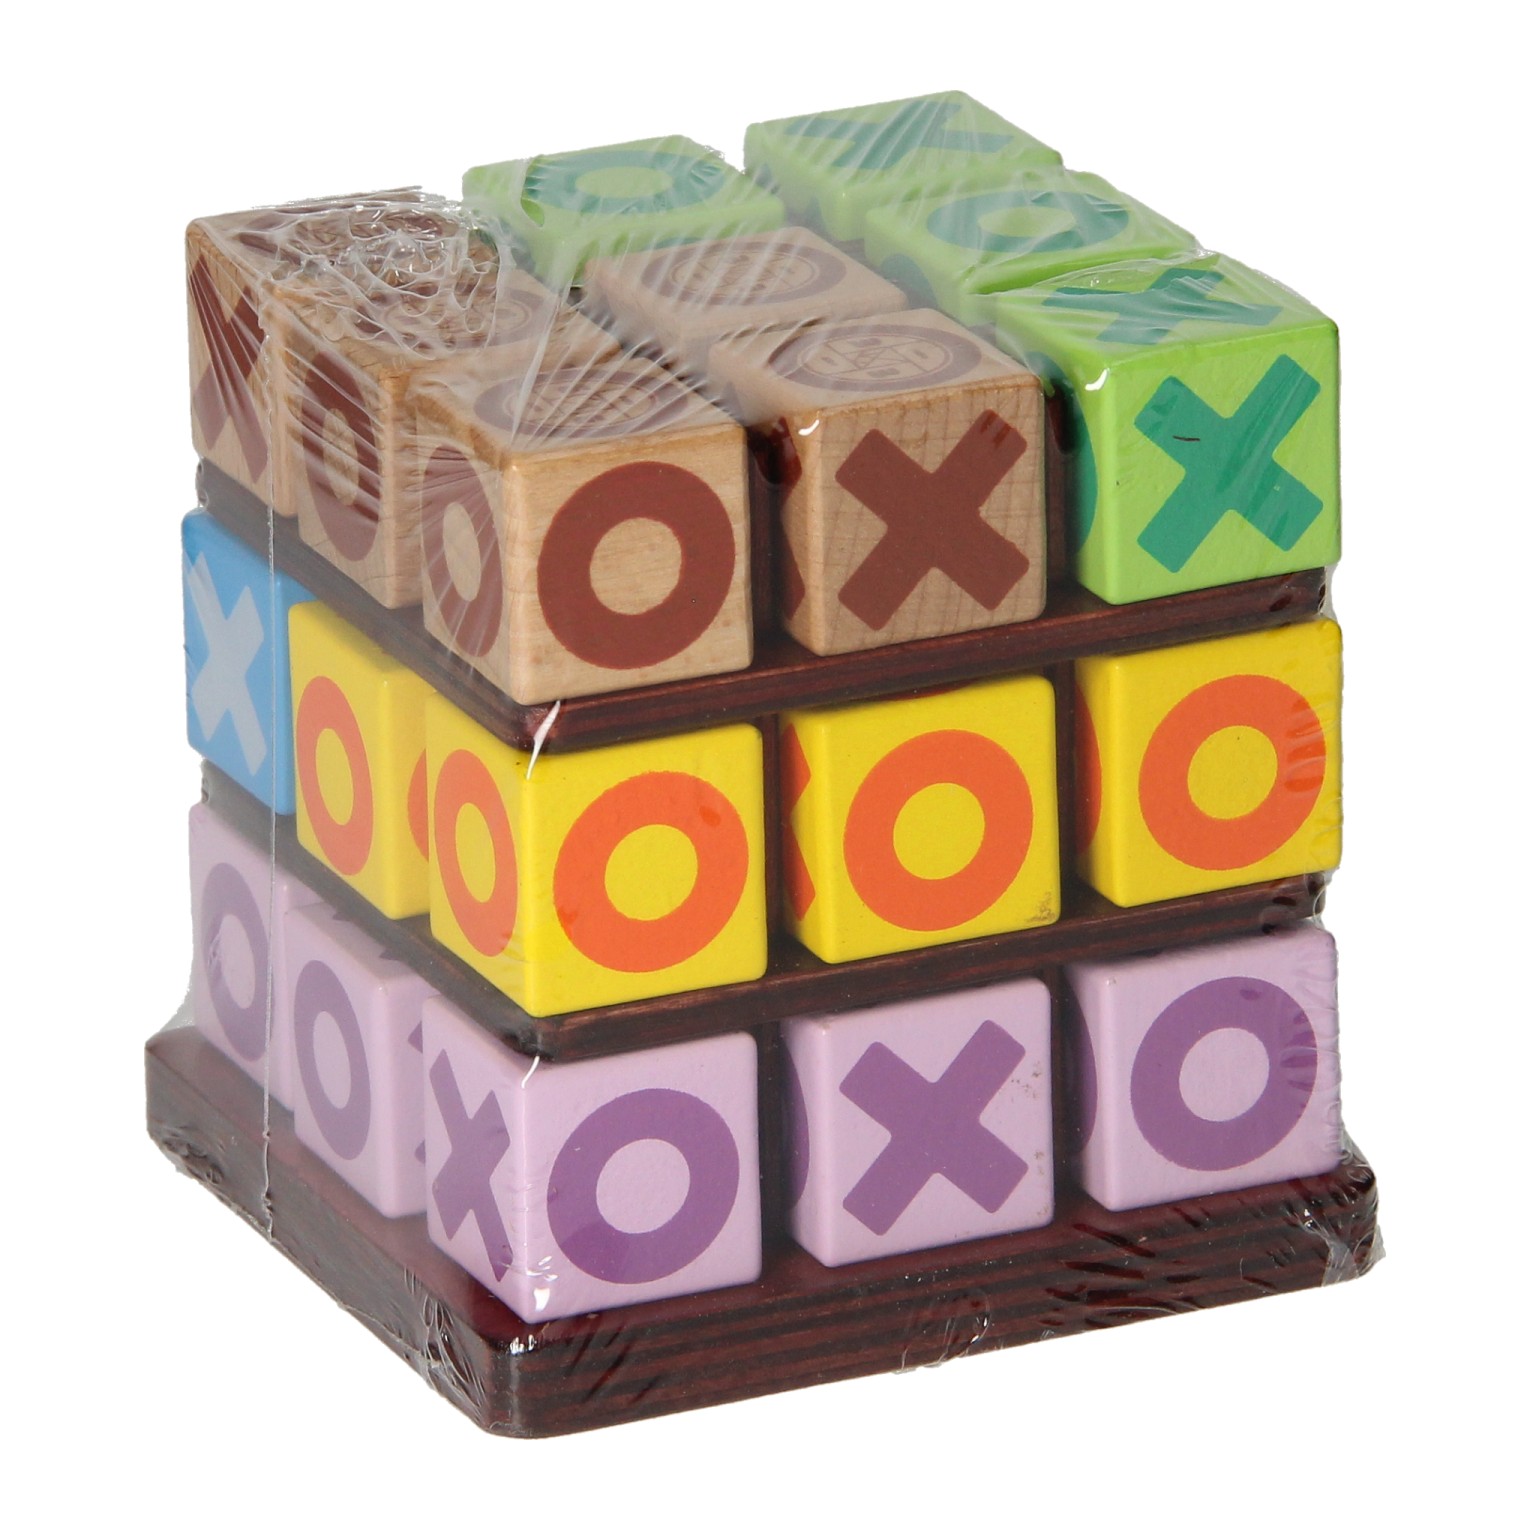 3D-Tic-Tac-Toe-Spiel aus Holz, 26-teilig.